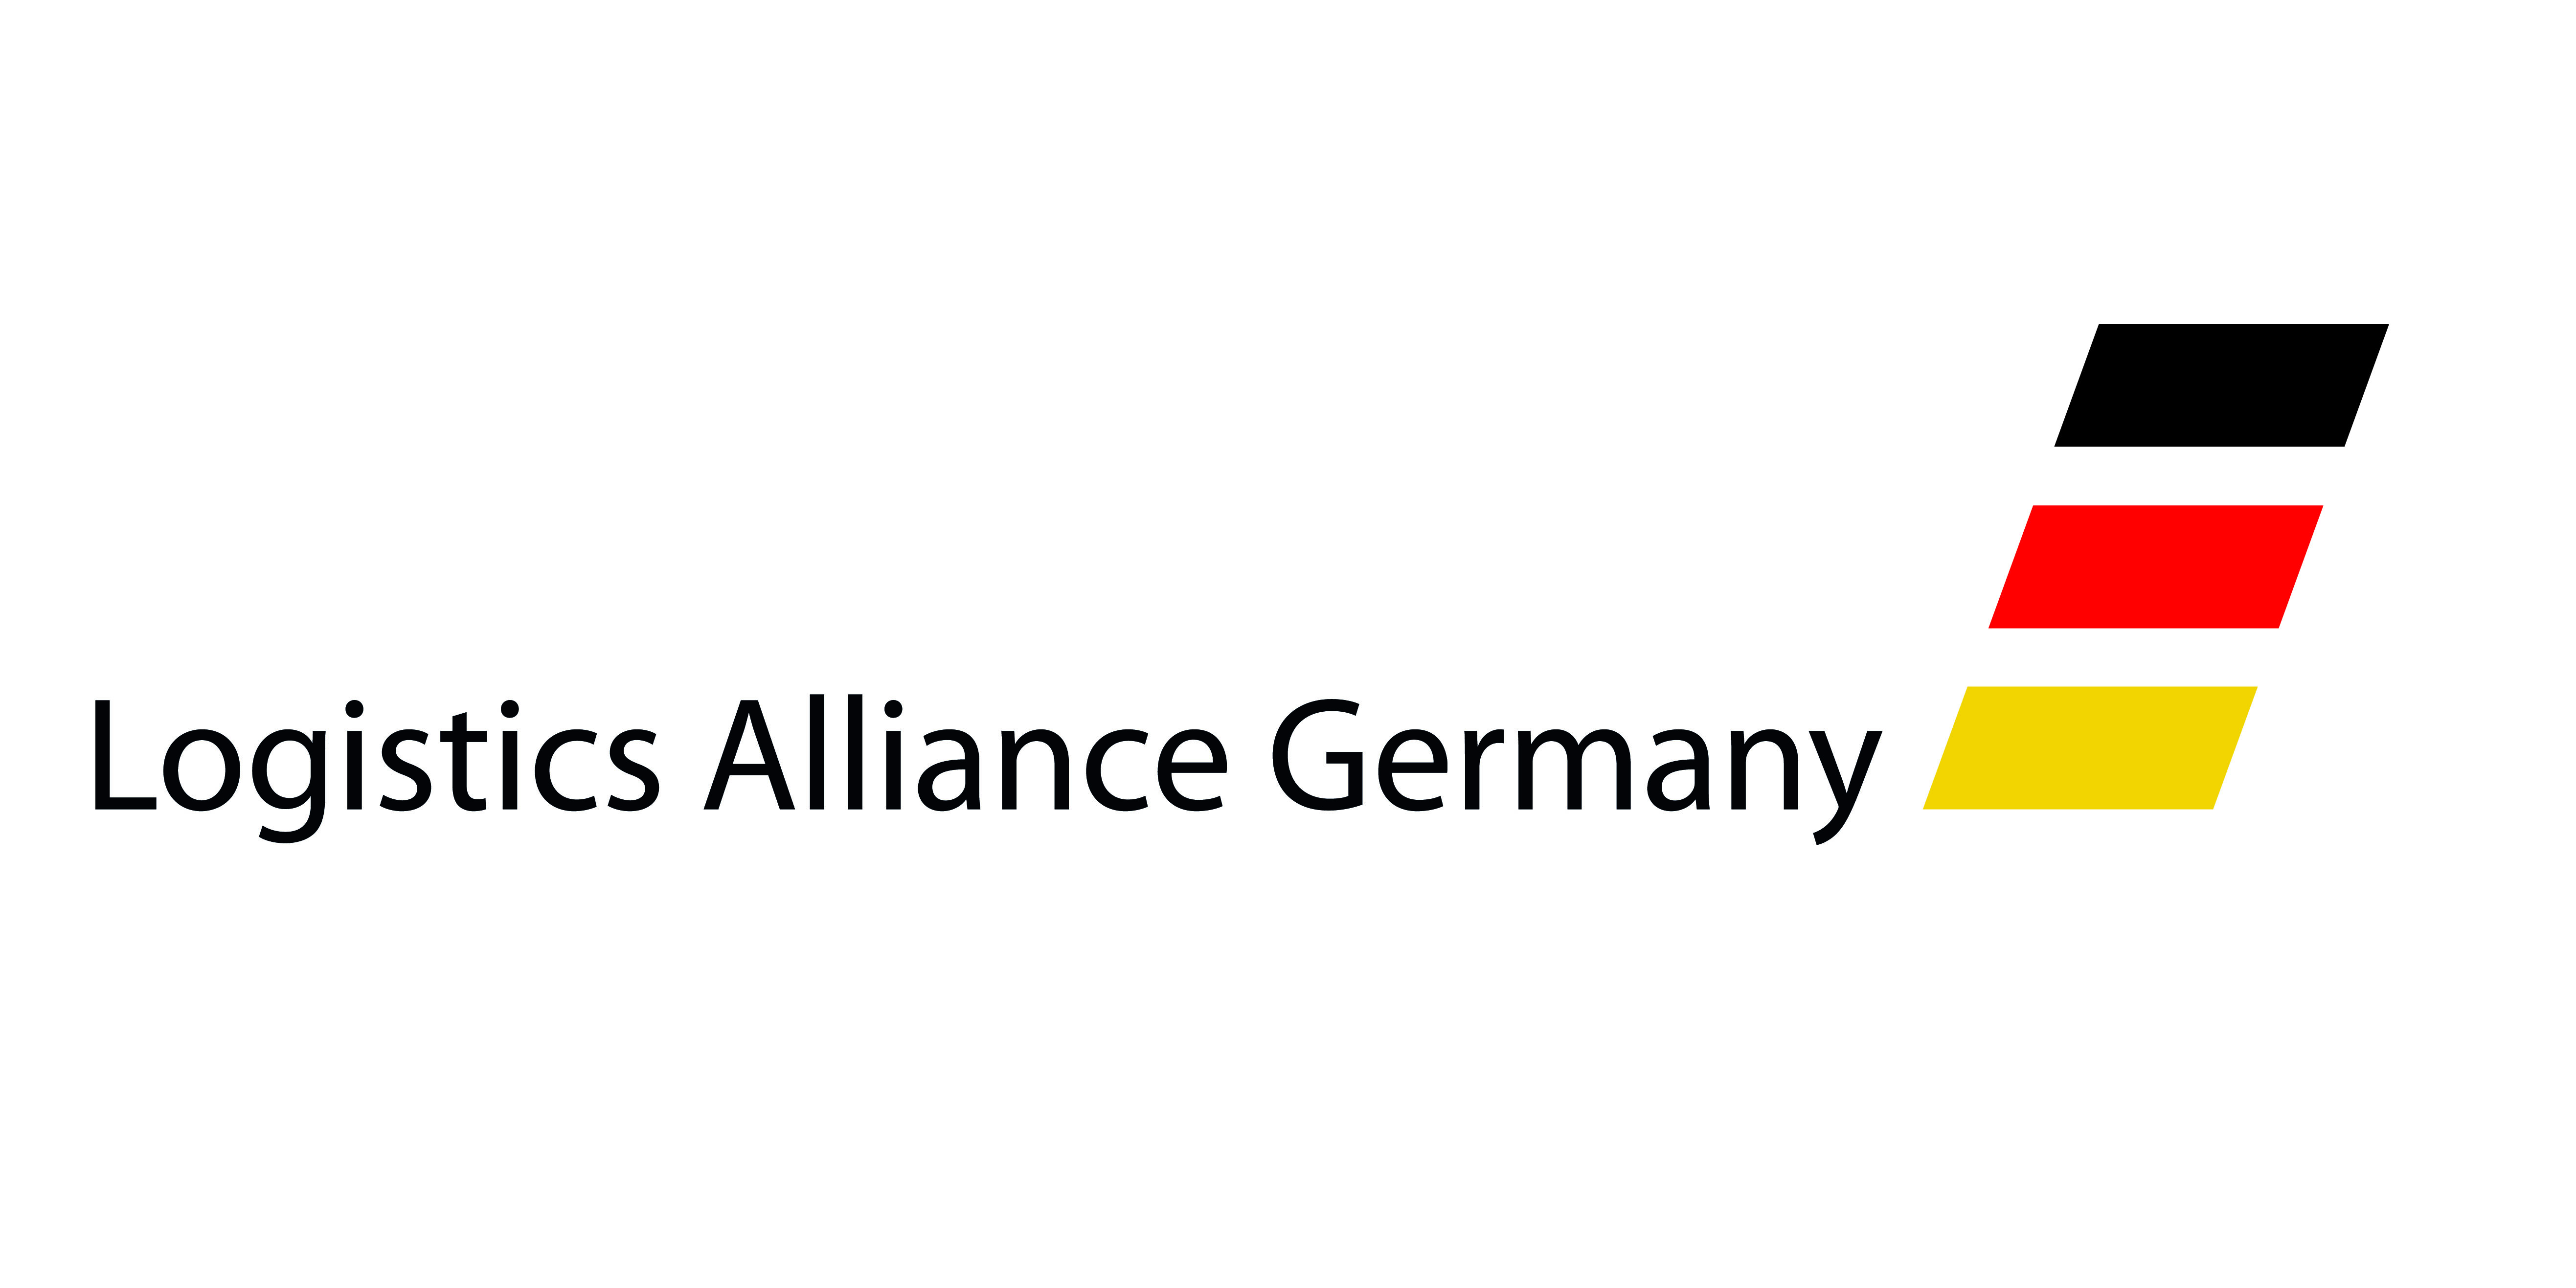 Logistics Hall of Fame and Logistics Alliance Germany agree partnership